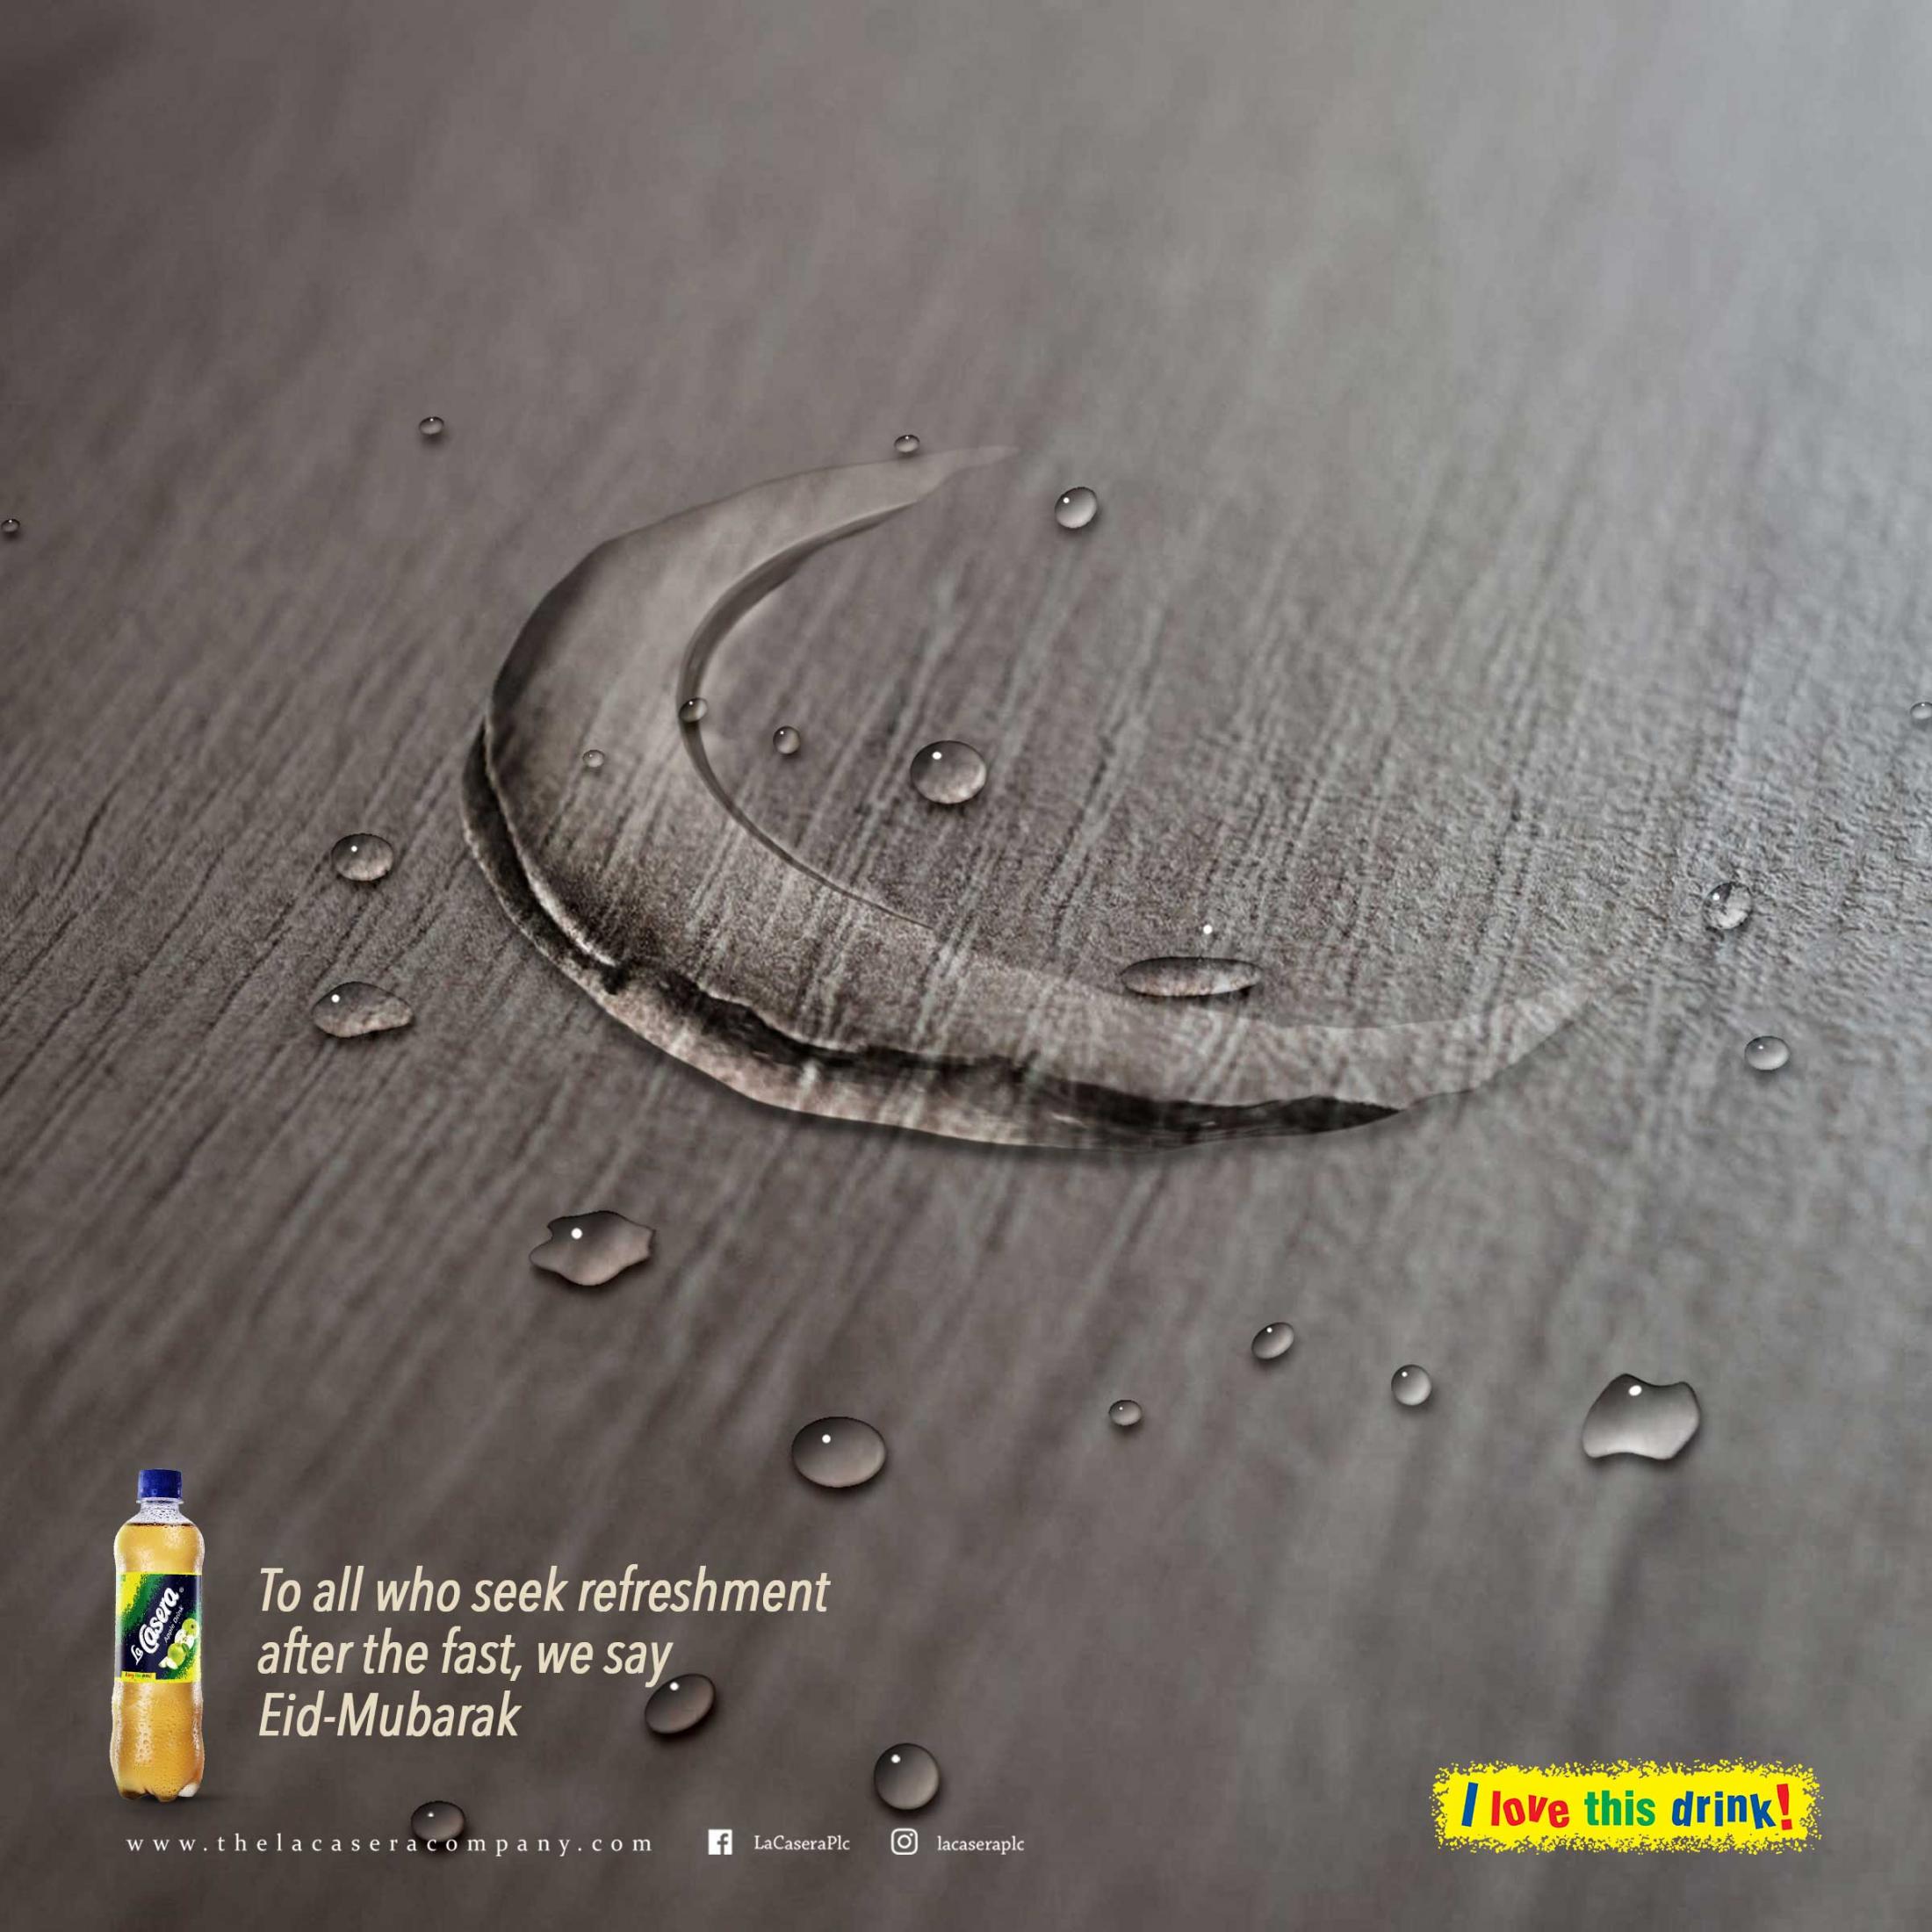 Eid marketing advertisement by La Casera